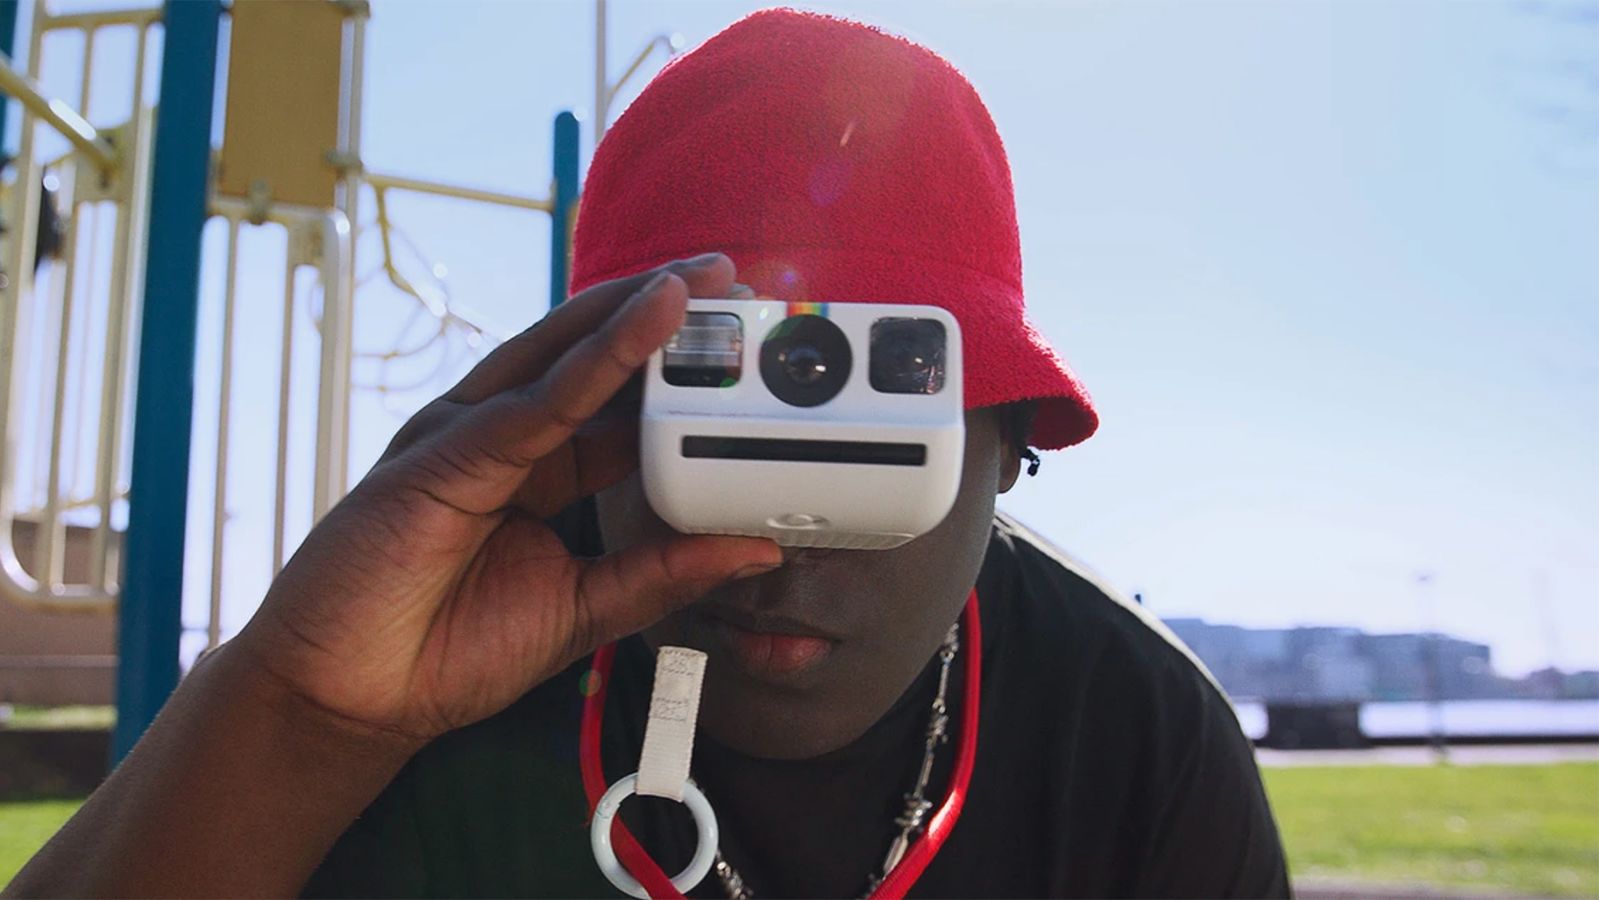 Polaroid Go review: Instant fun & convenience